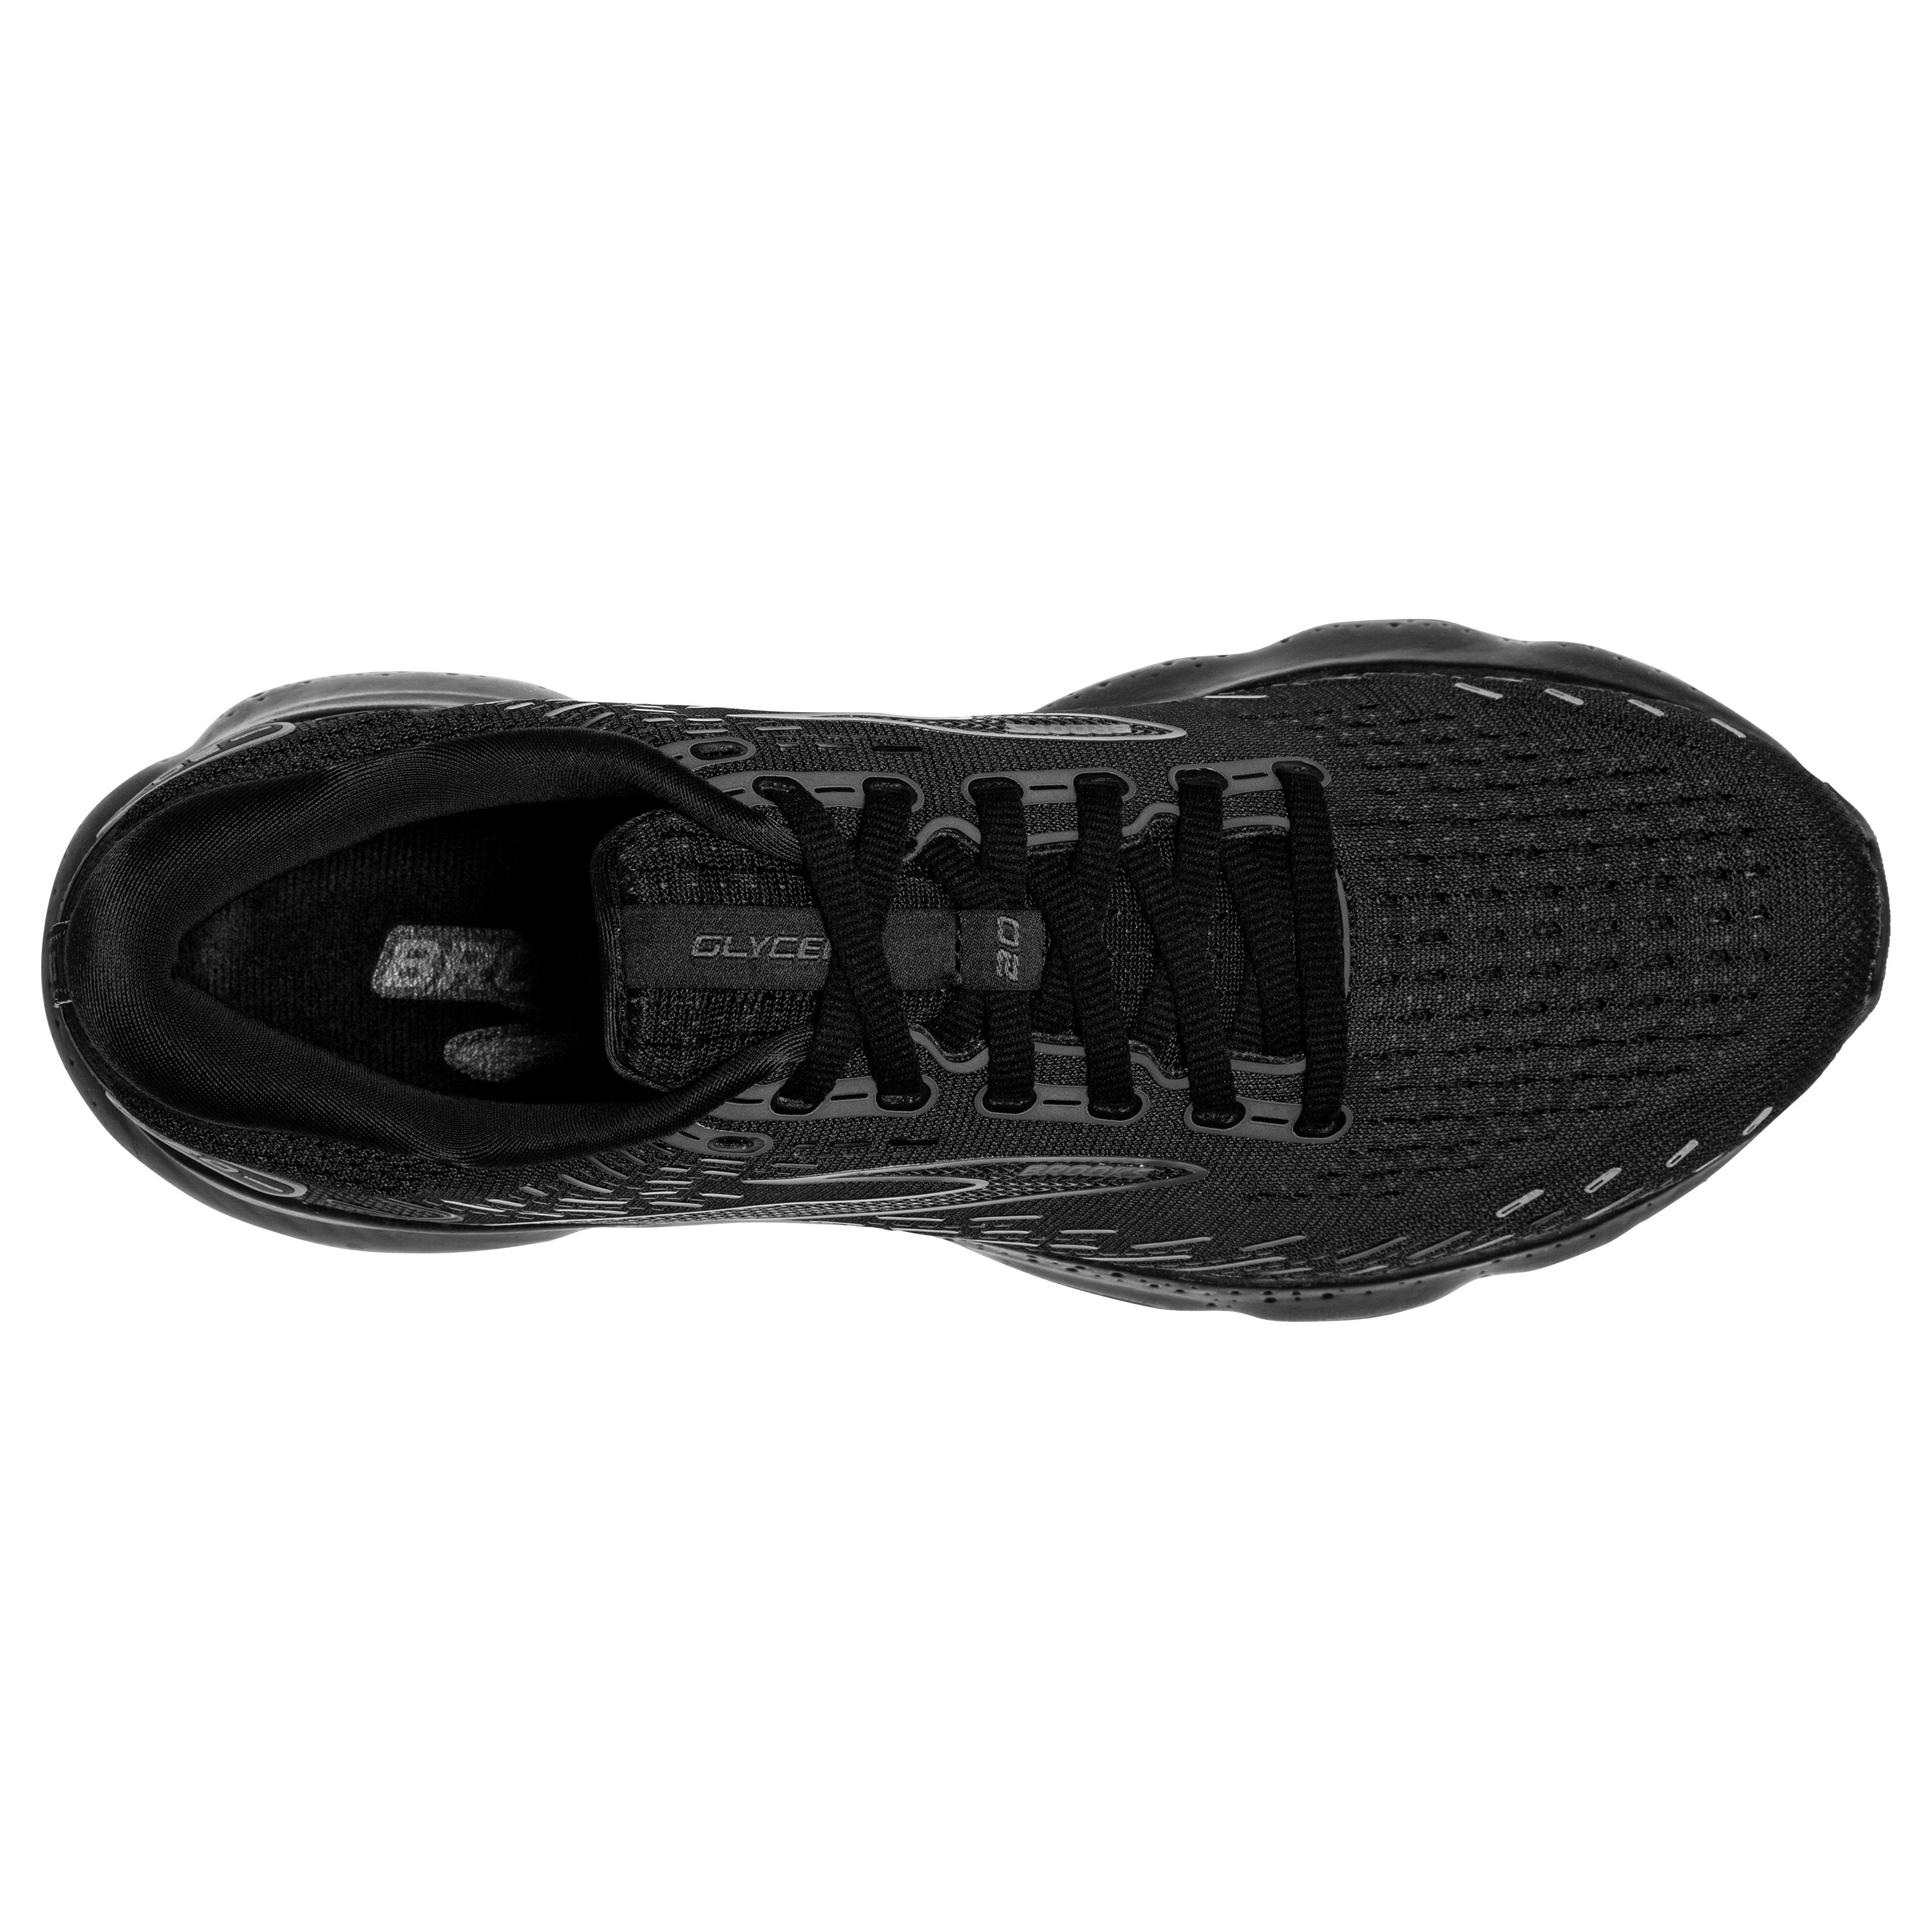 Glycerin 20 - Men's Wide Feet Running shoes